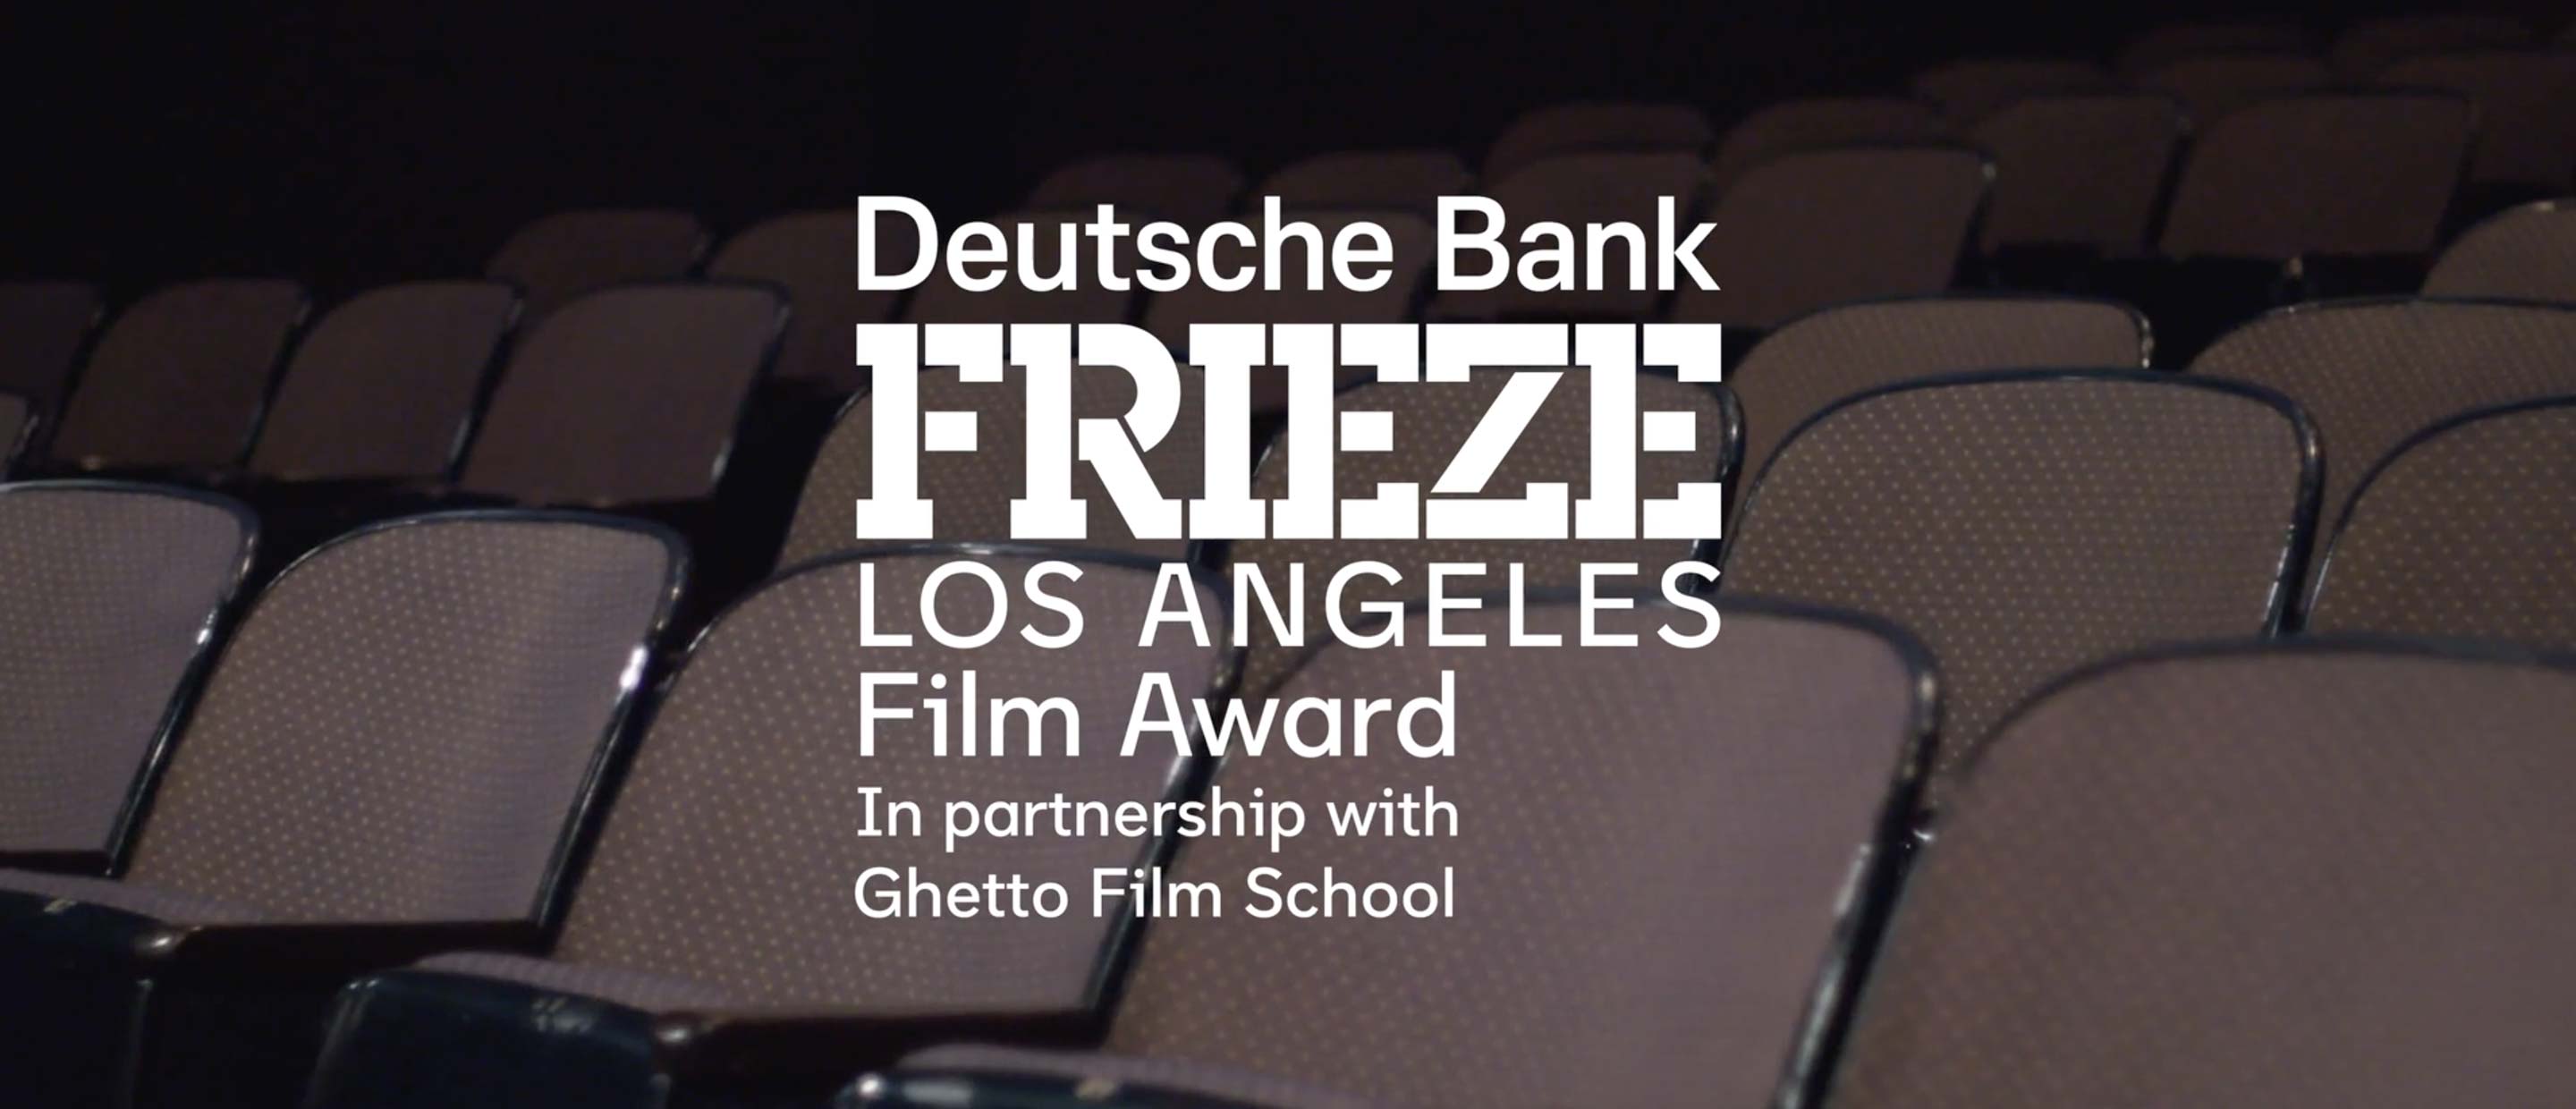 Deutsche-Bank-Film-Award-LA-1.jpg